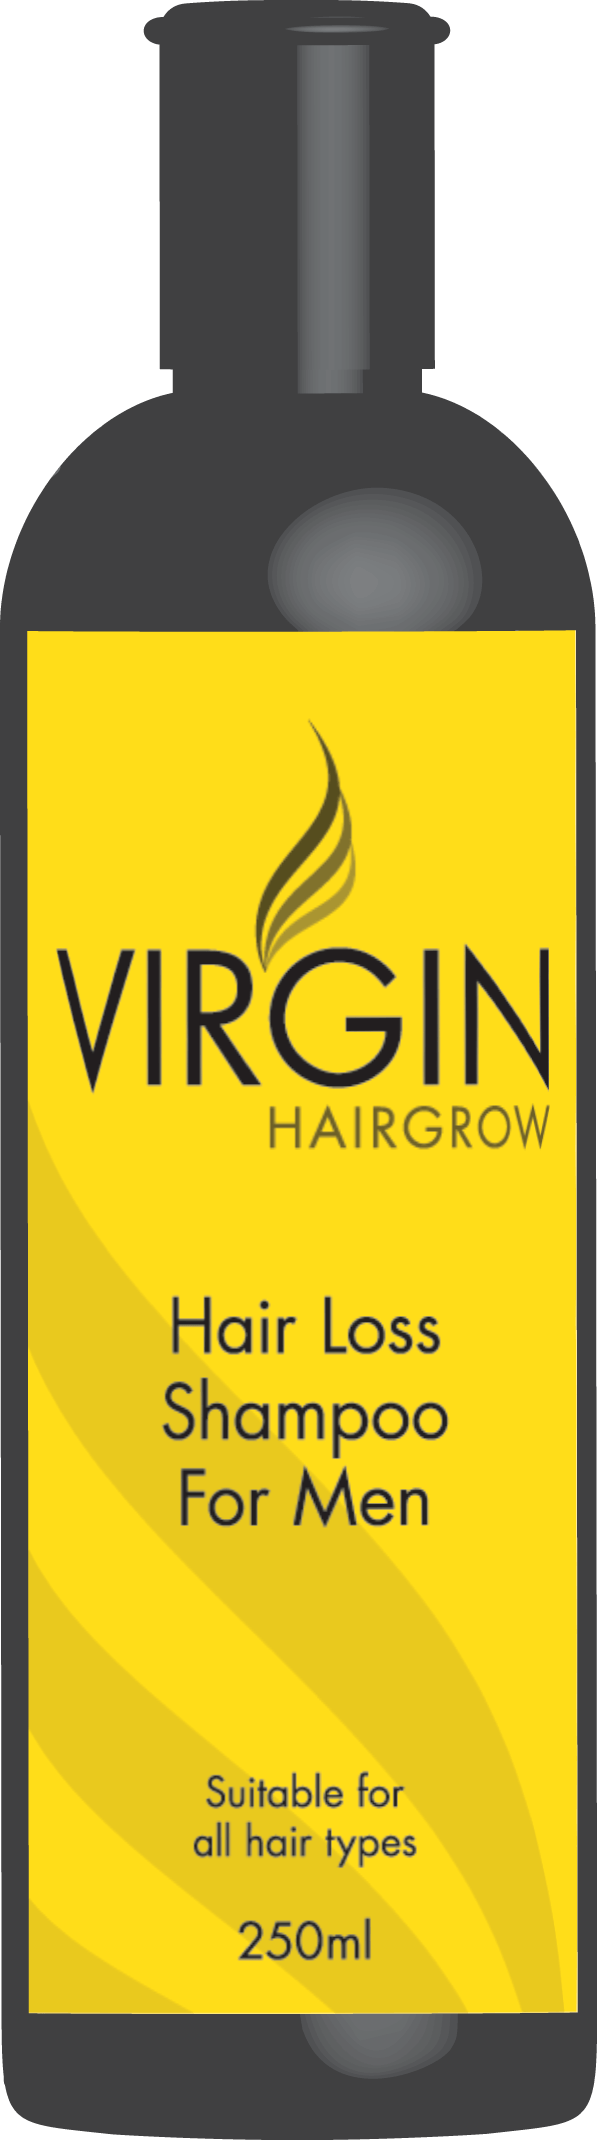 Shampoo with Back Logo - VIRGIN HAIR REGAIN SHAMPOO - GROW THICK HEALTHY HAIR IN 30 DAYS!! | eBay